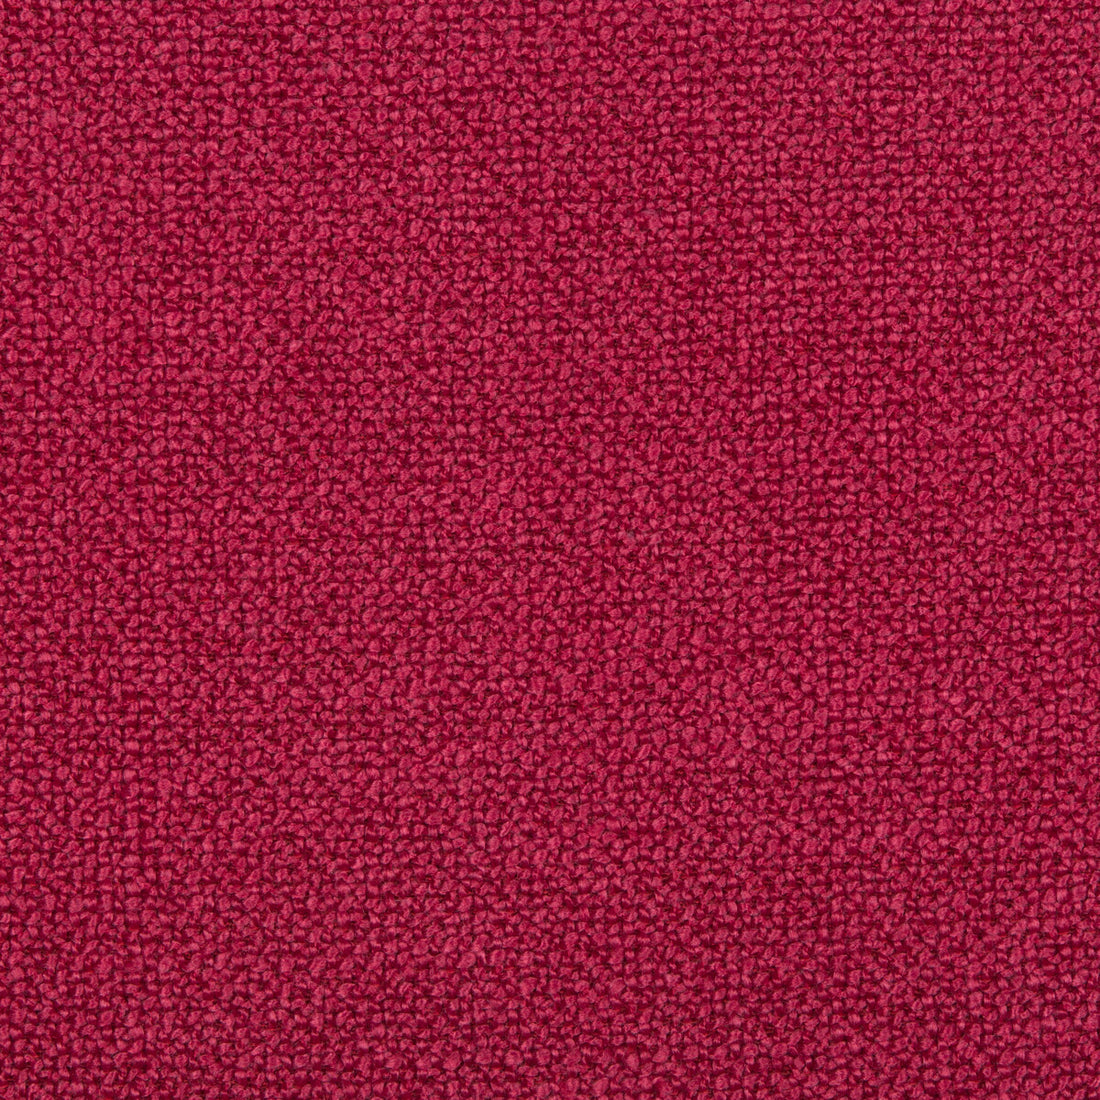 Kravet Smart fabric in 35379-97 color - pattern 35379.97.0 - by Kravet Smart in the Performance Kravetarmor collection